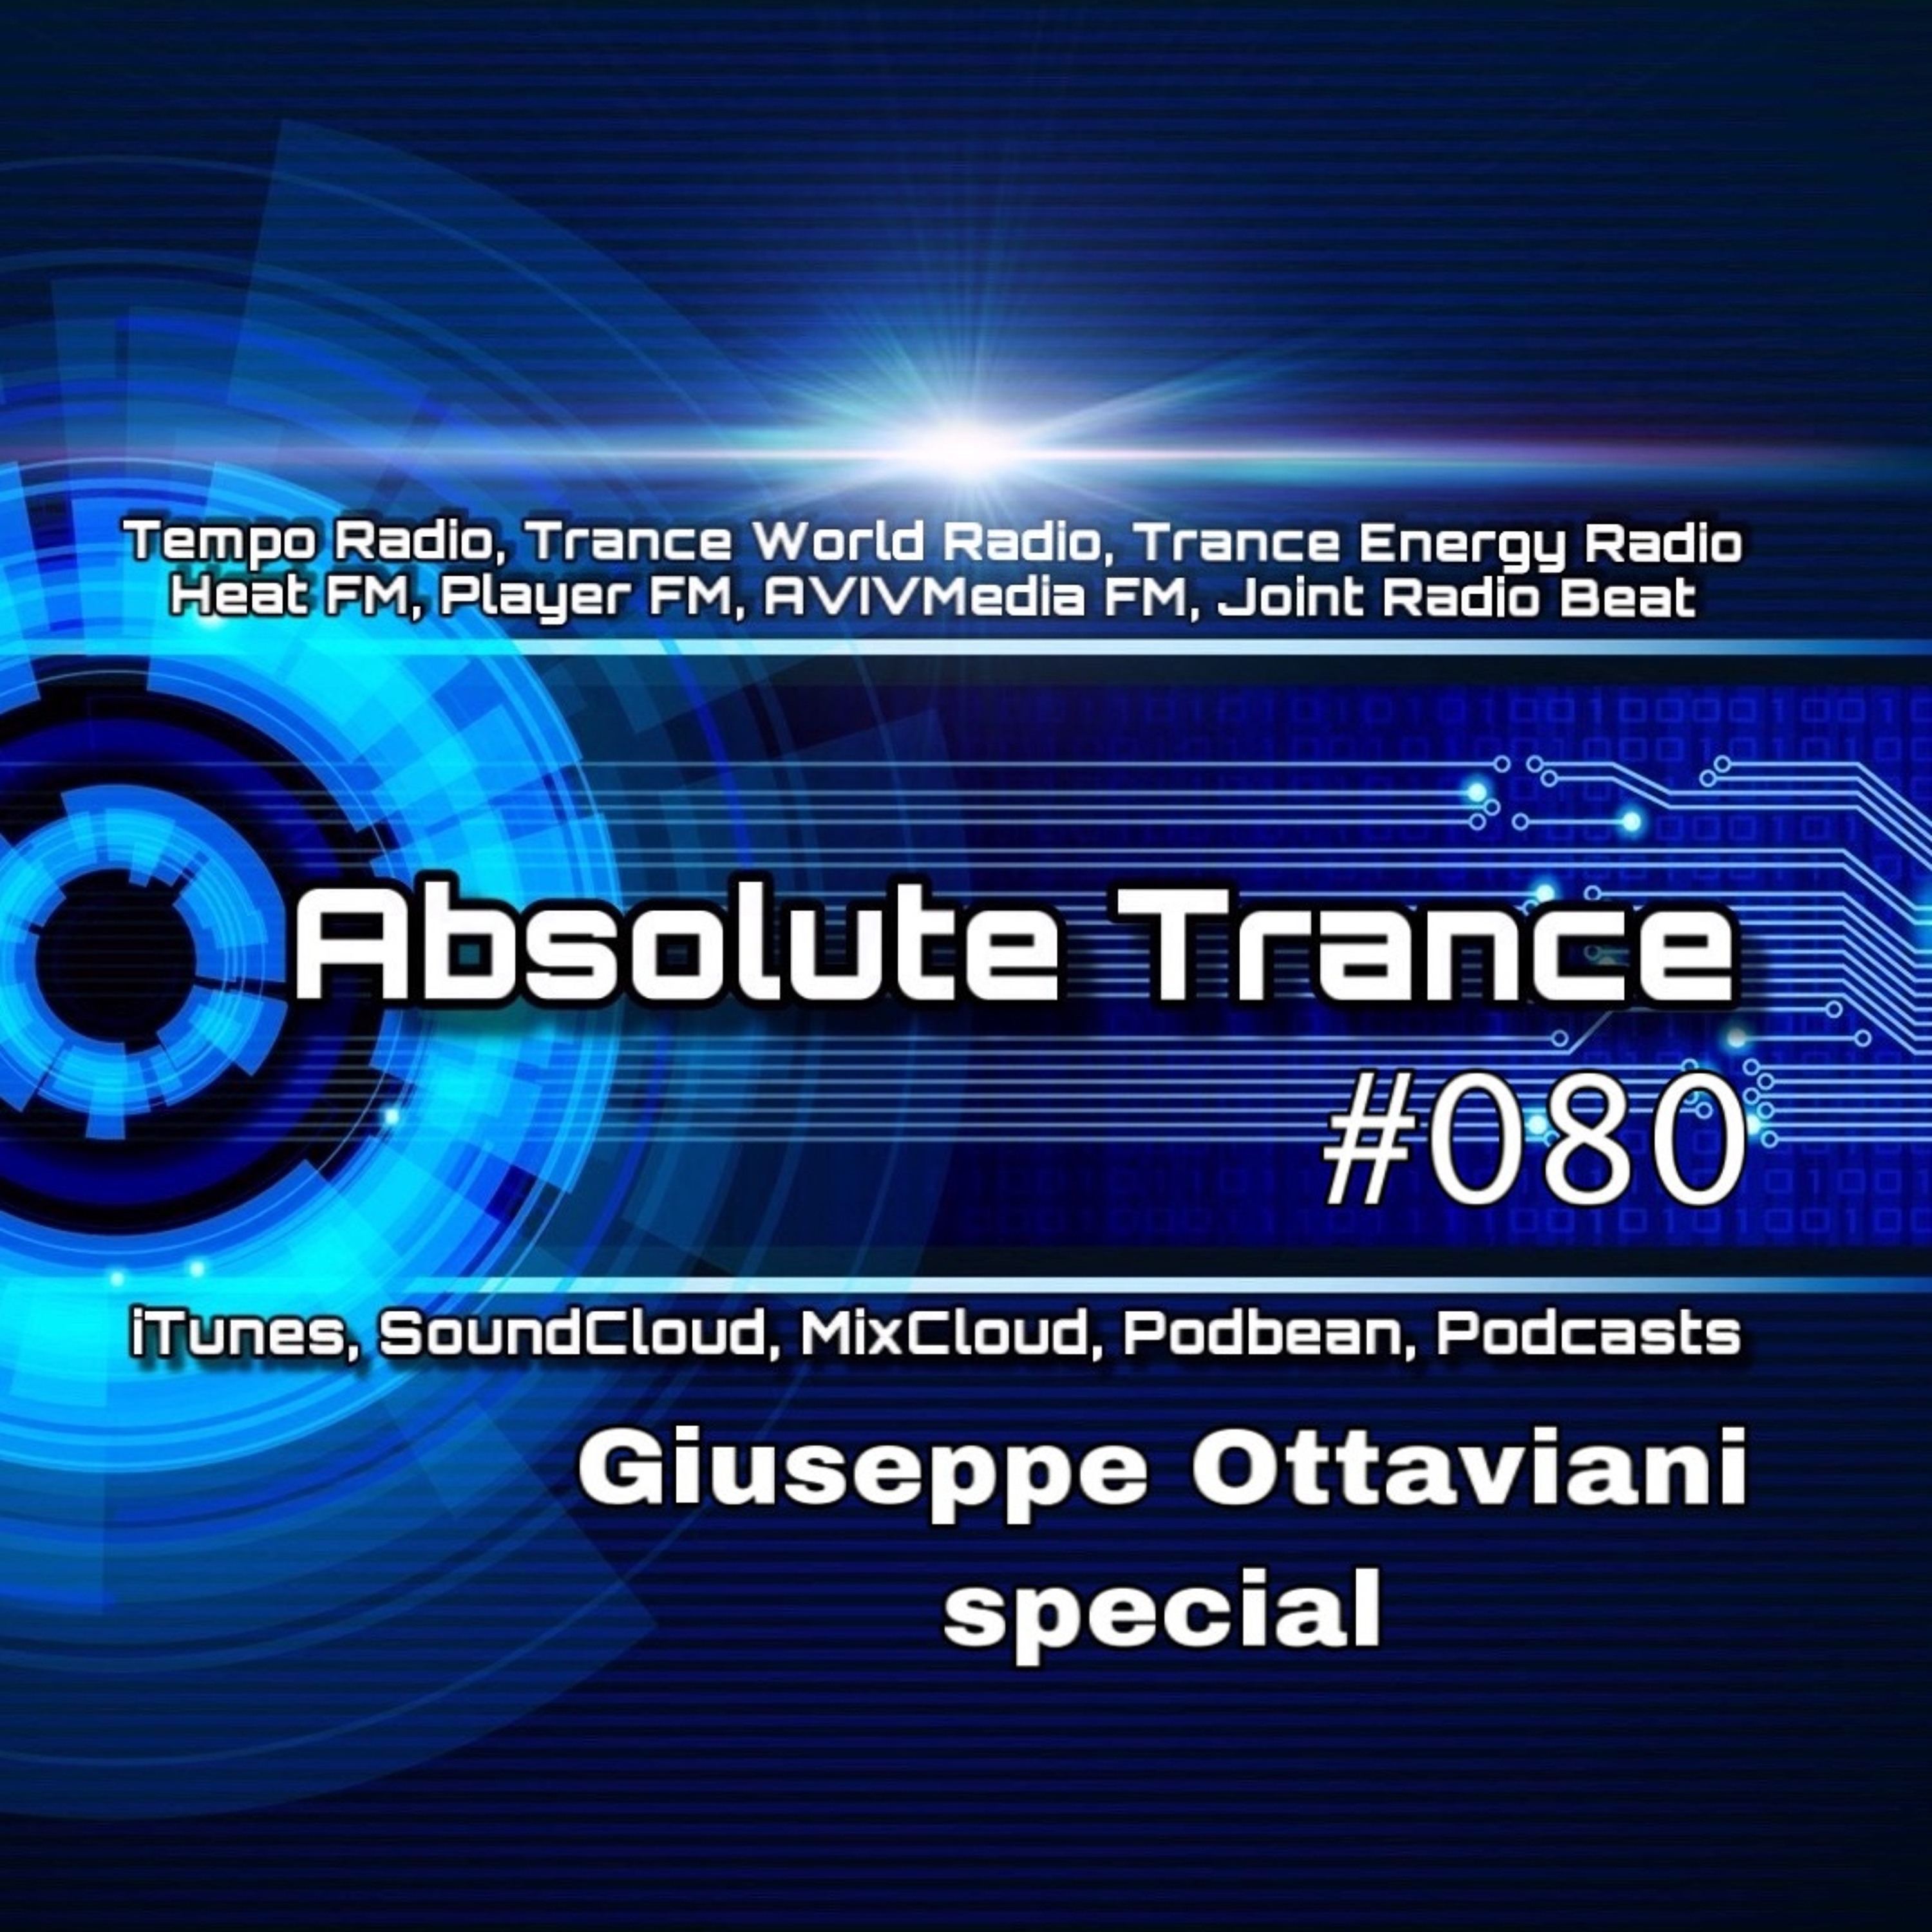 Absolute Trance #080 (Giuseppe Ottaviani special)